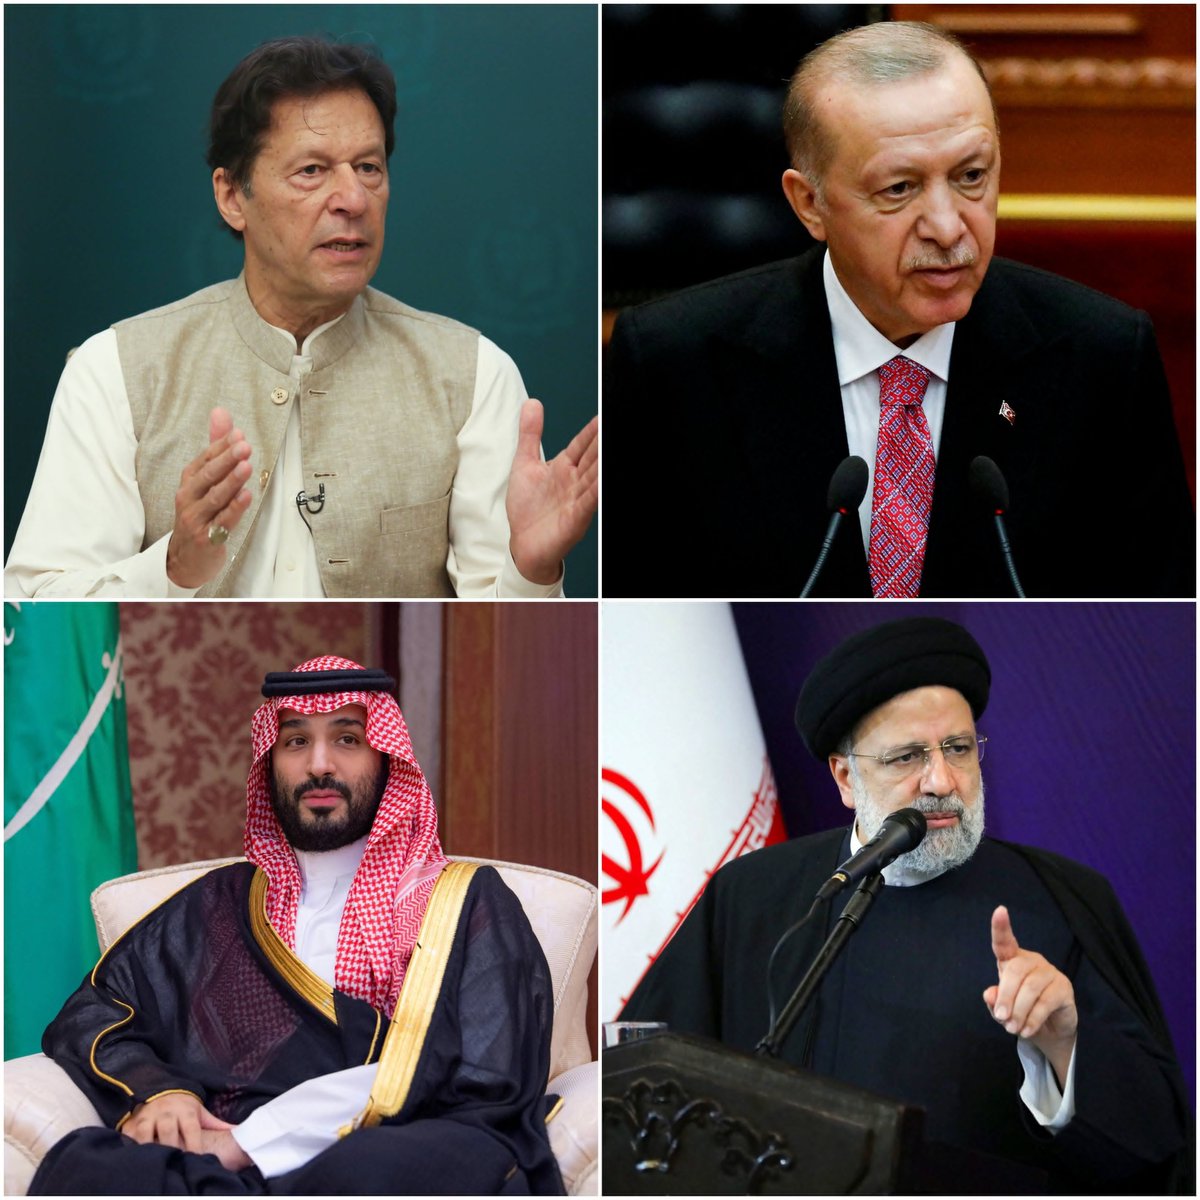 Who is the most loved & famous leader of Muslim world and why?

1. Recep Tayyip Erdogan
2. Imran Khan
3. Mohammed bin Salman Al Saud
4. Ebrahim Raisi